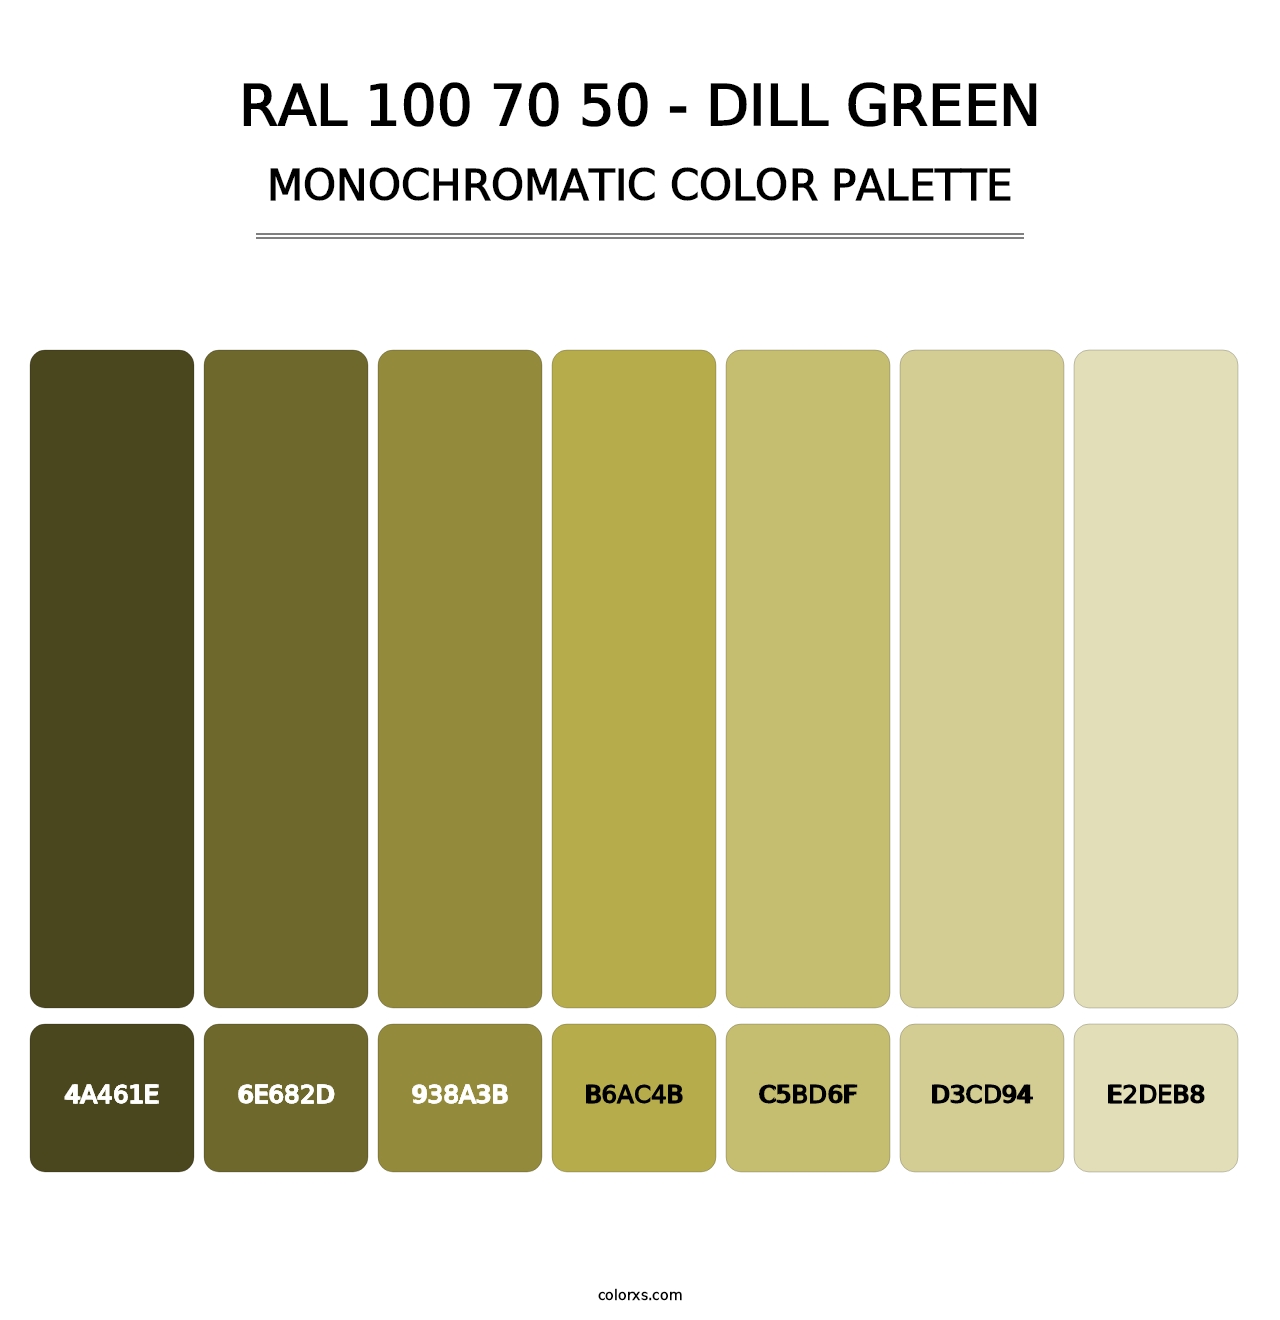 RAL 100 70 50 - Dill Green - Monochromatic Color Palette